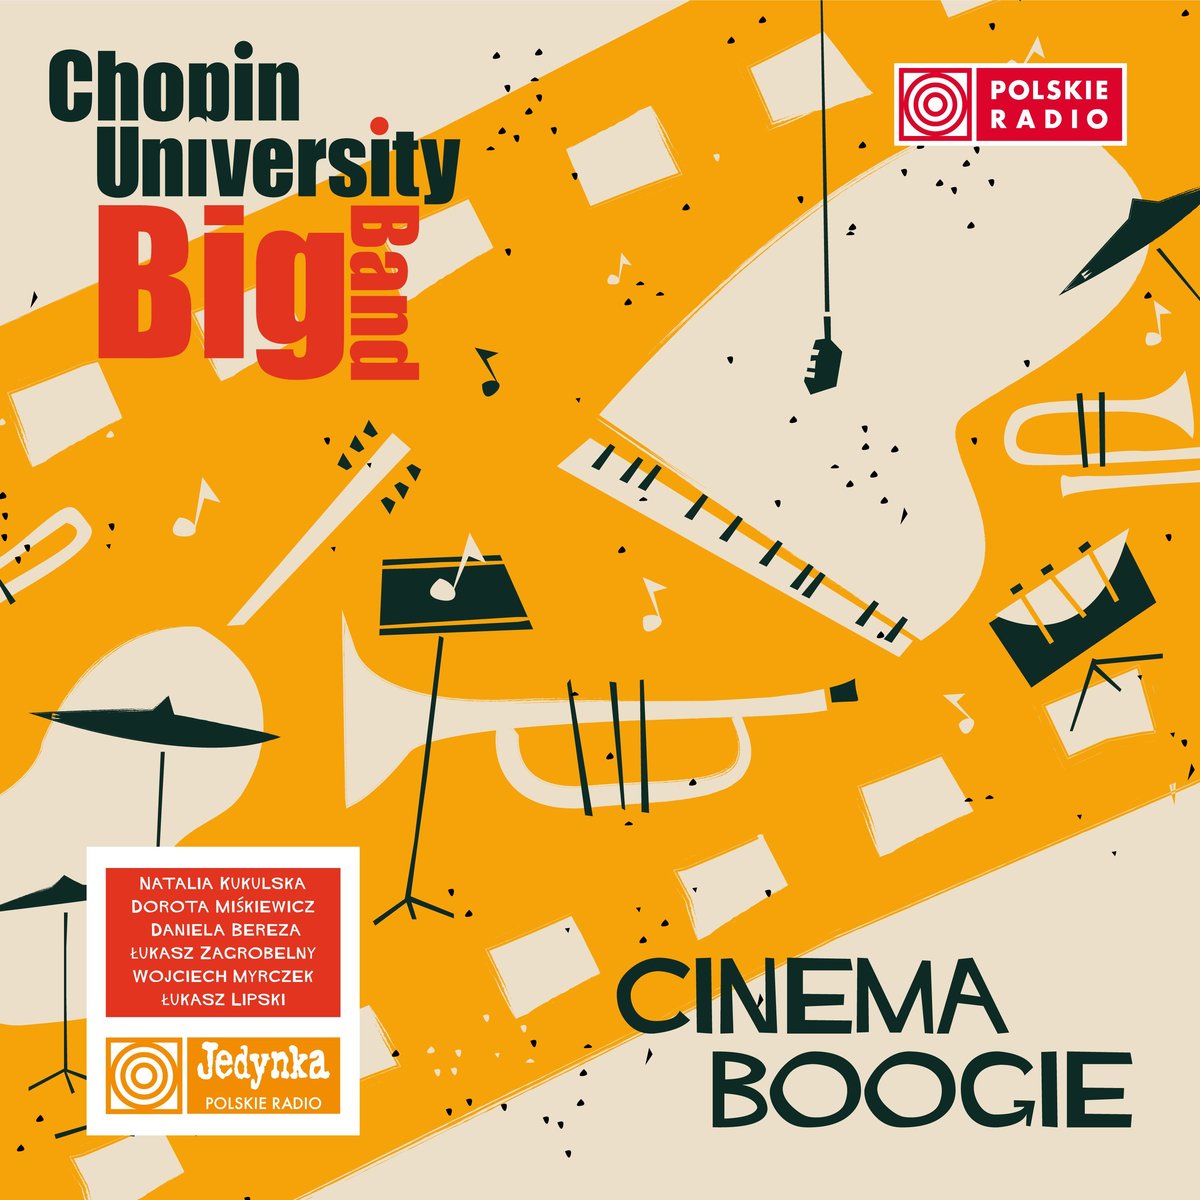 Chopin University Big Band - Cinema Boogie